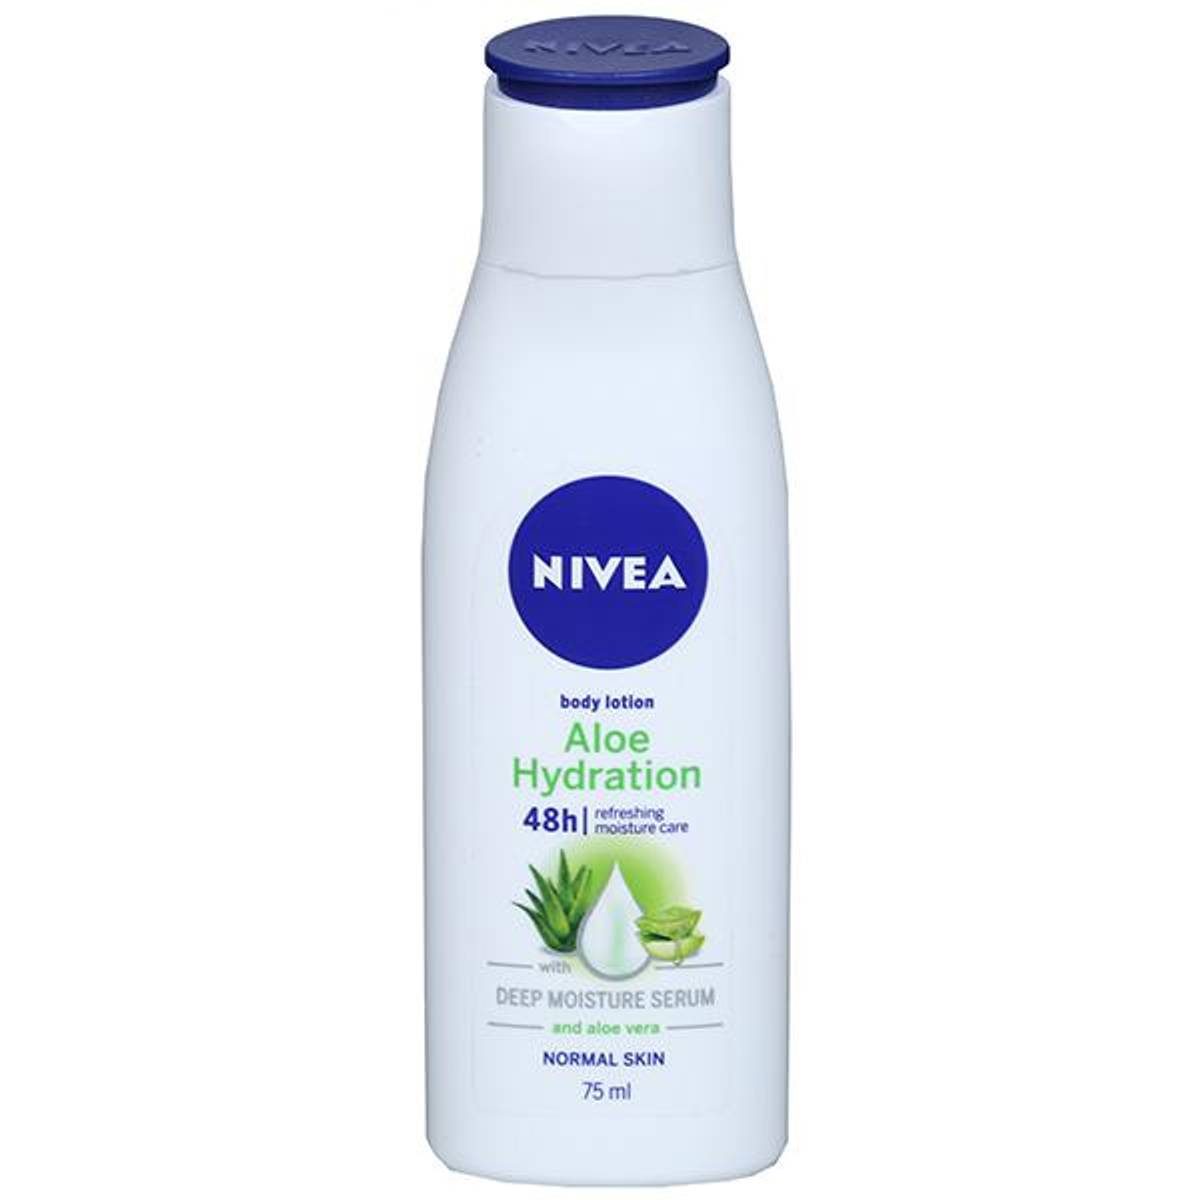 Nivea Body Lotion Aloe Hydration 41Rs Off 75ml